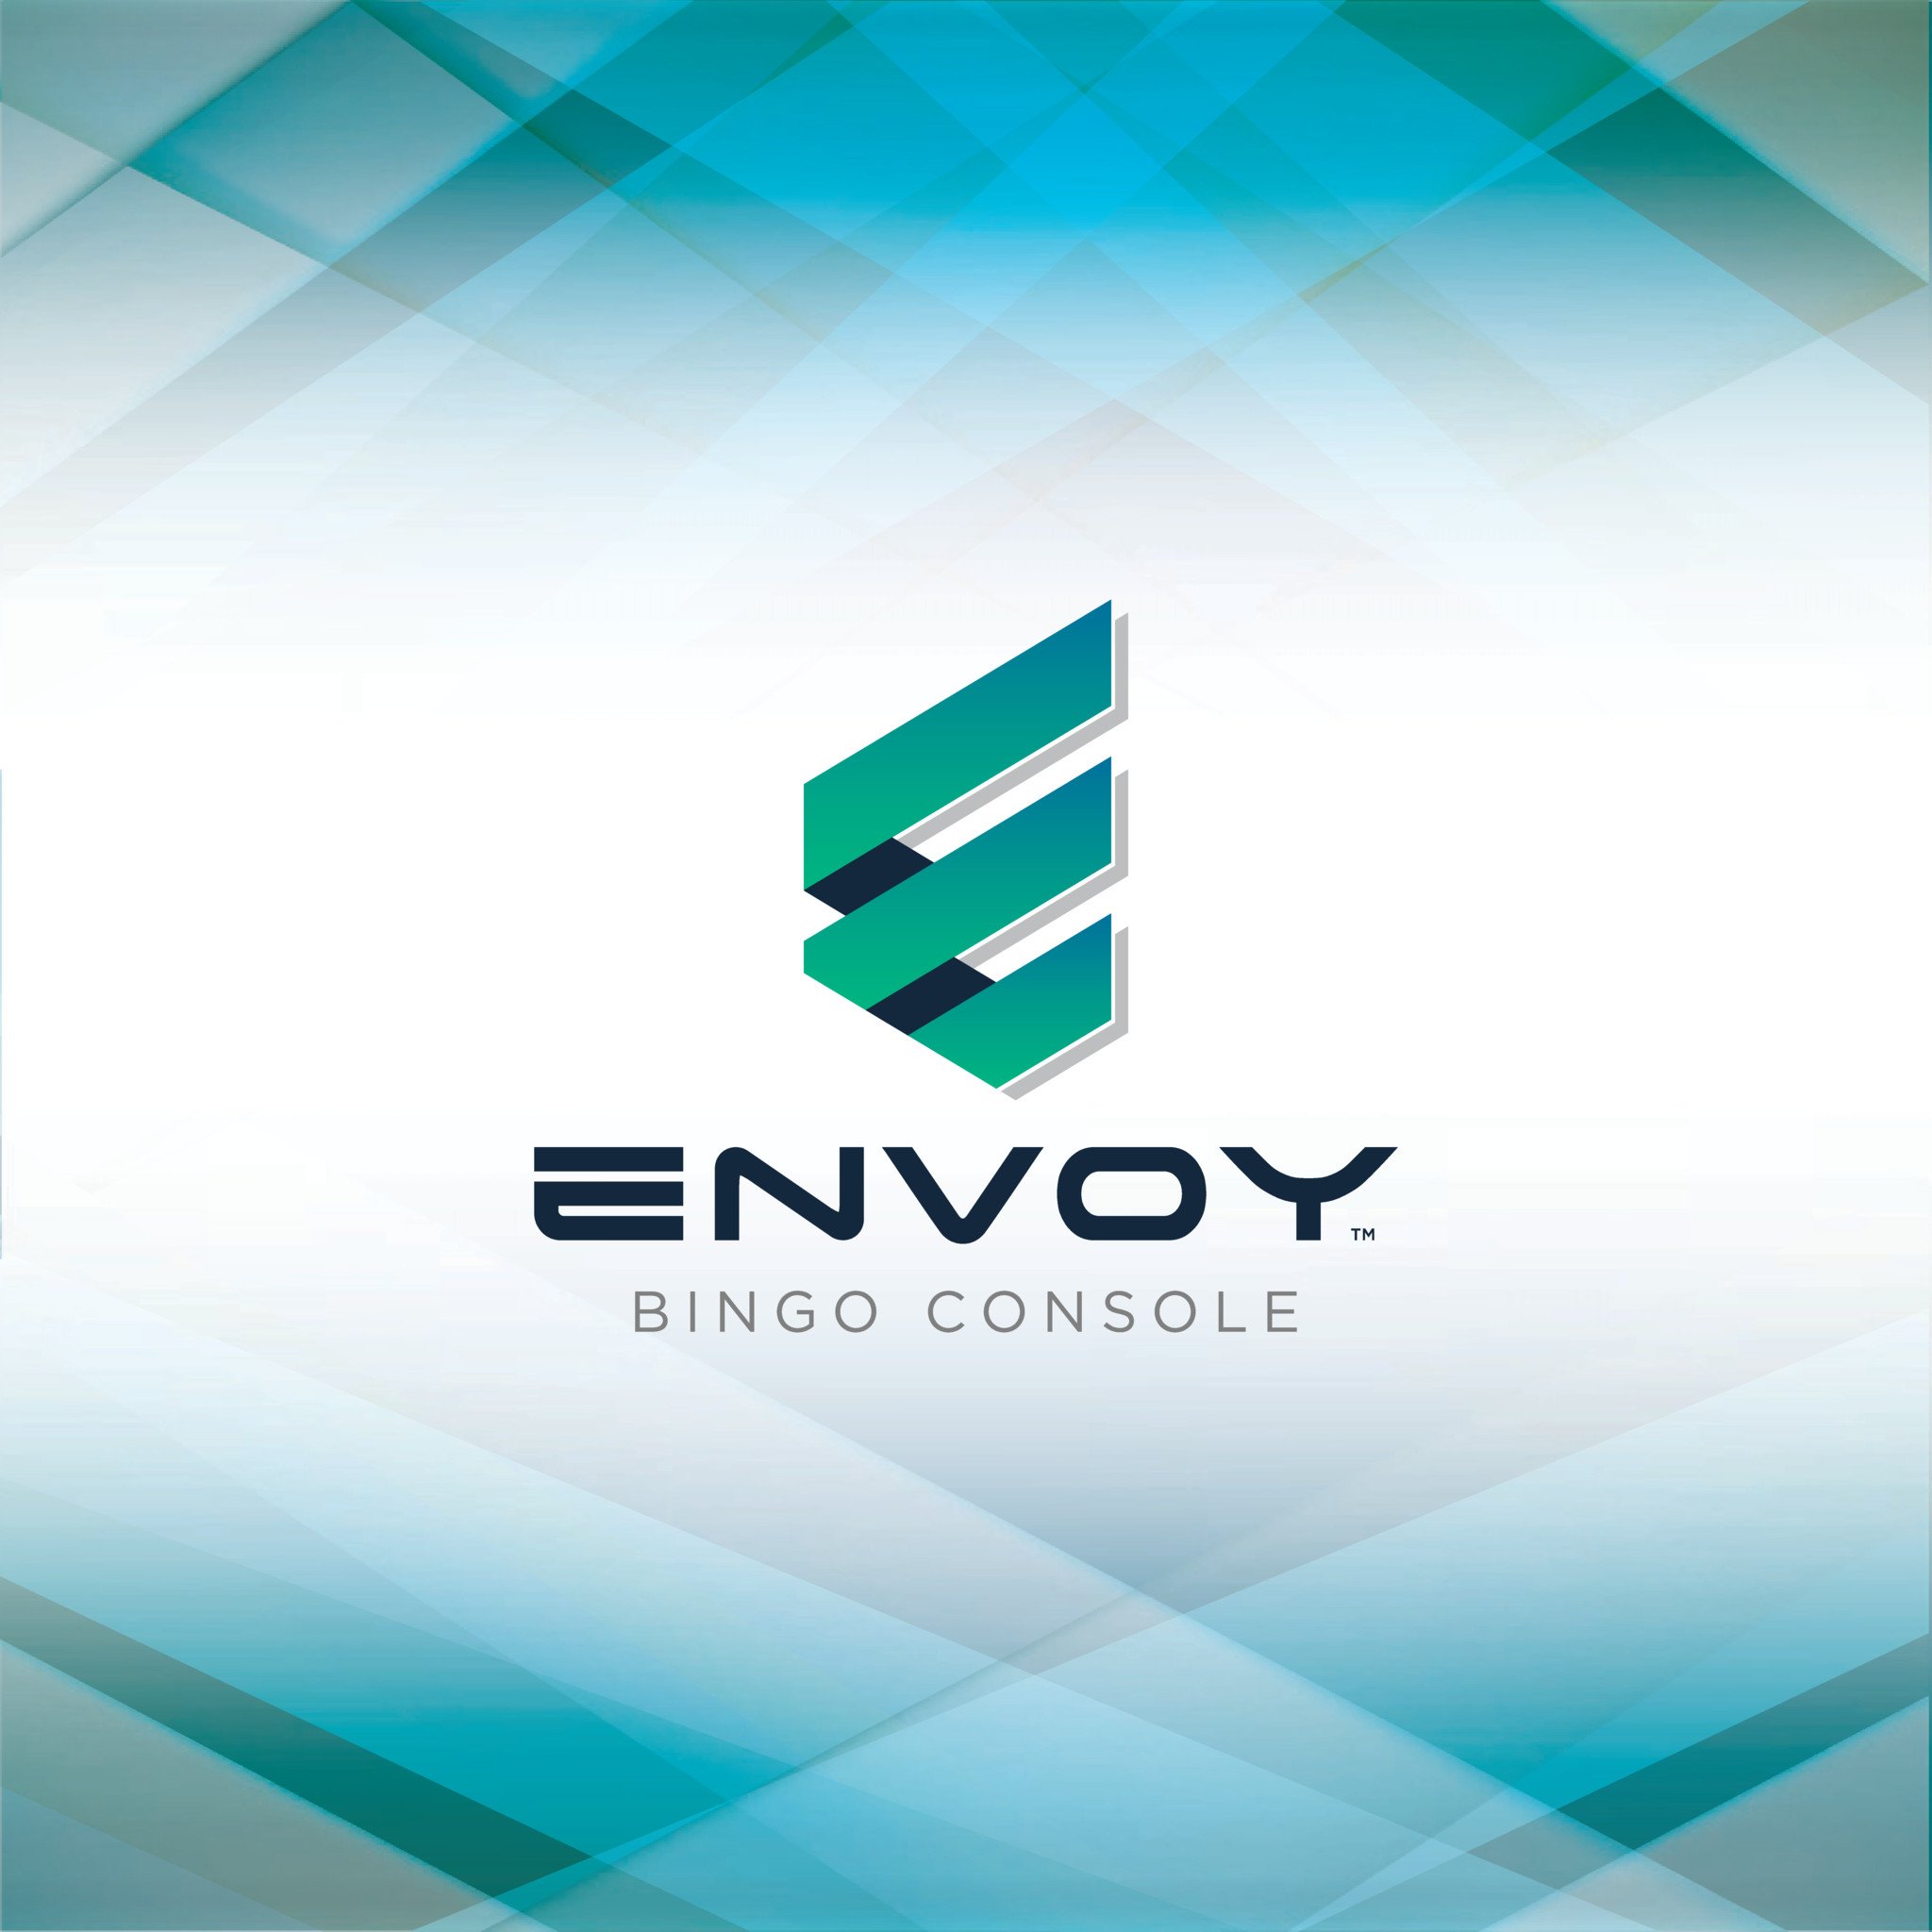 Envoy Bingo Console Brochure Promotional Materials/Equipment Flyers & Brochures